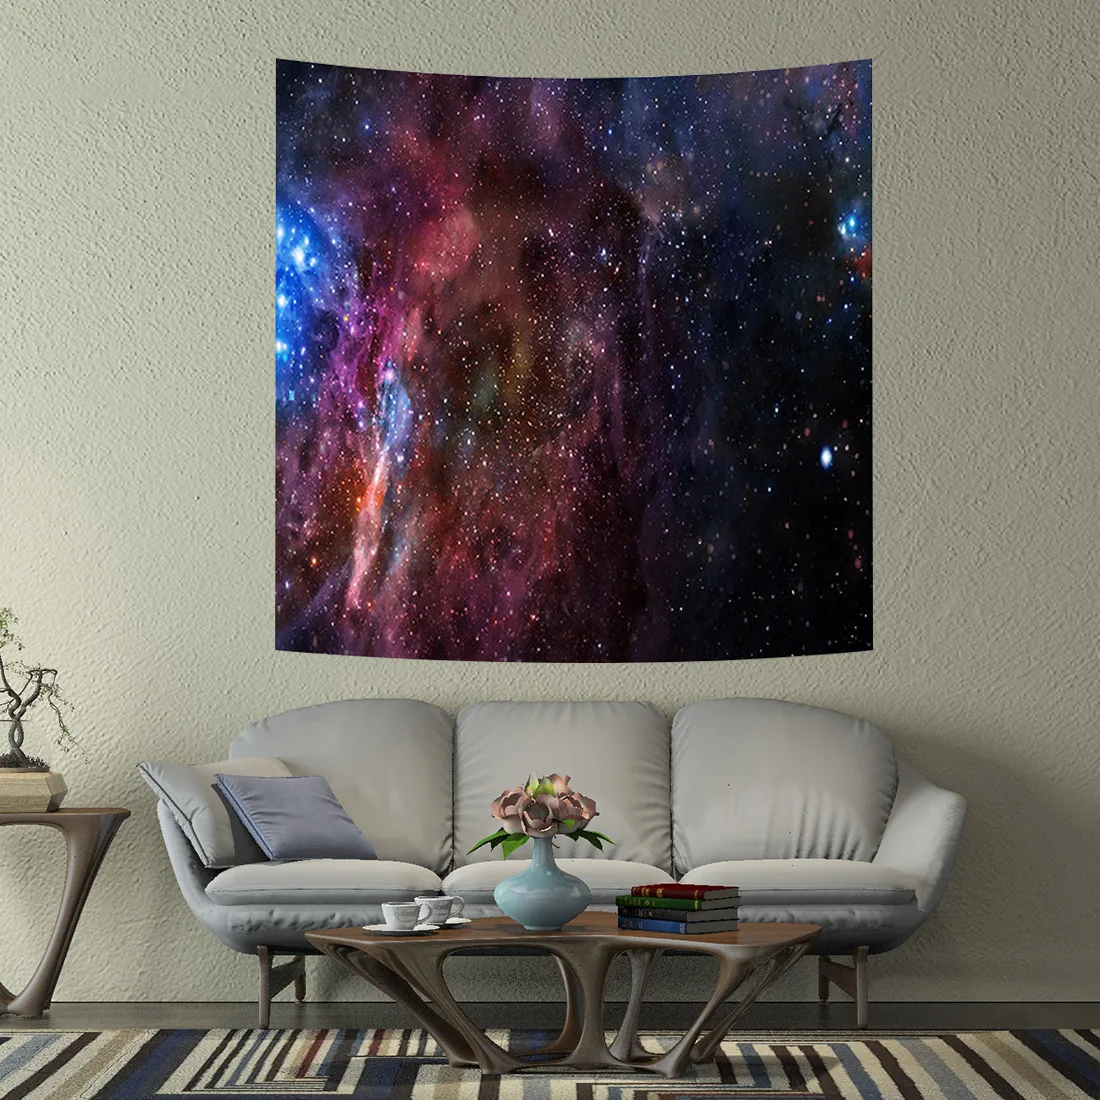 Galaxy стене висит хиппи-гобелен домашний декор в стиле ретро Йога пляжный коврик 150x130 см/200x150 см/150x102 см - Цвет: 3